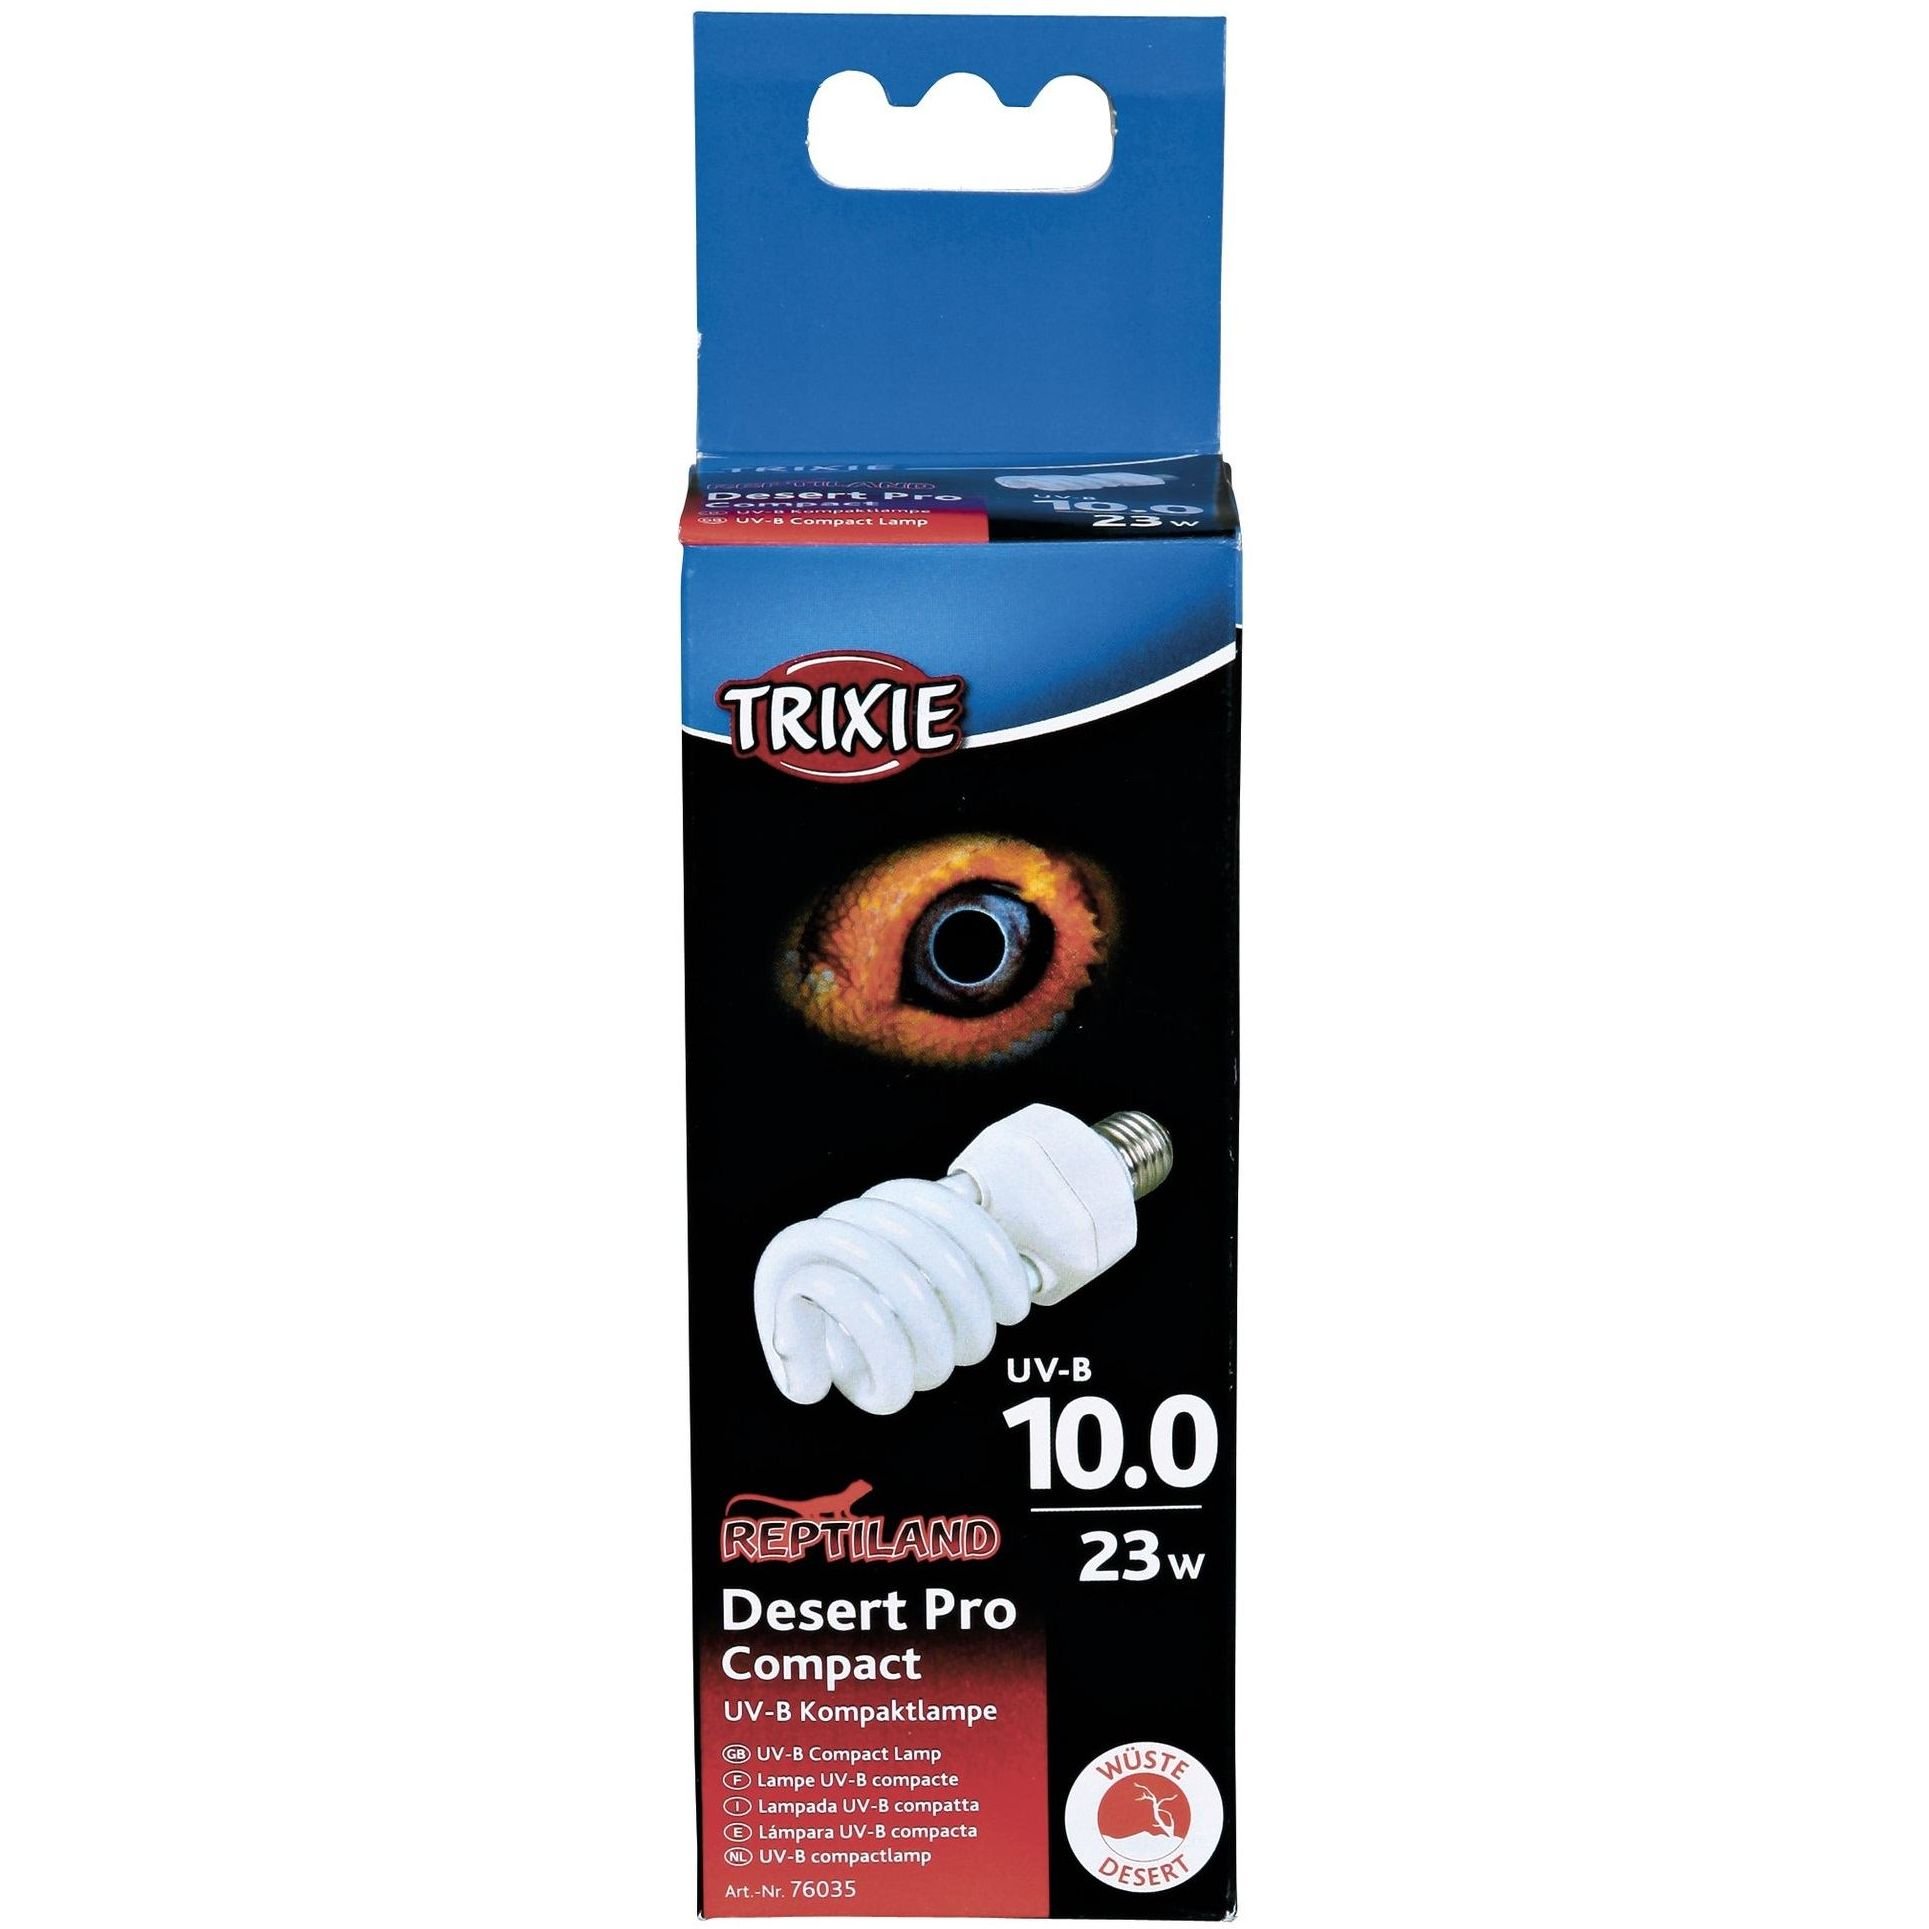 Лампа Trixie Desert Pro Compact 10.0 для тераріуму ультрафіолетова, 23 W, E27 - фото 2